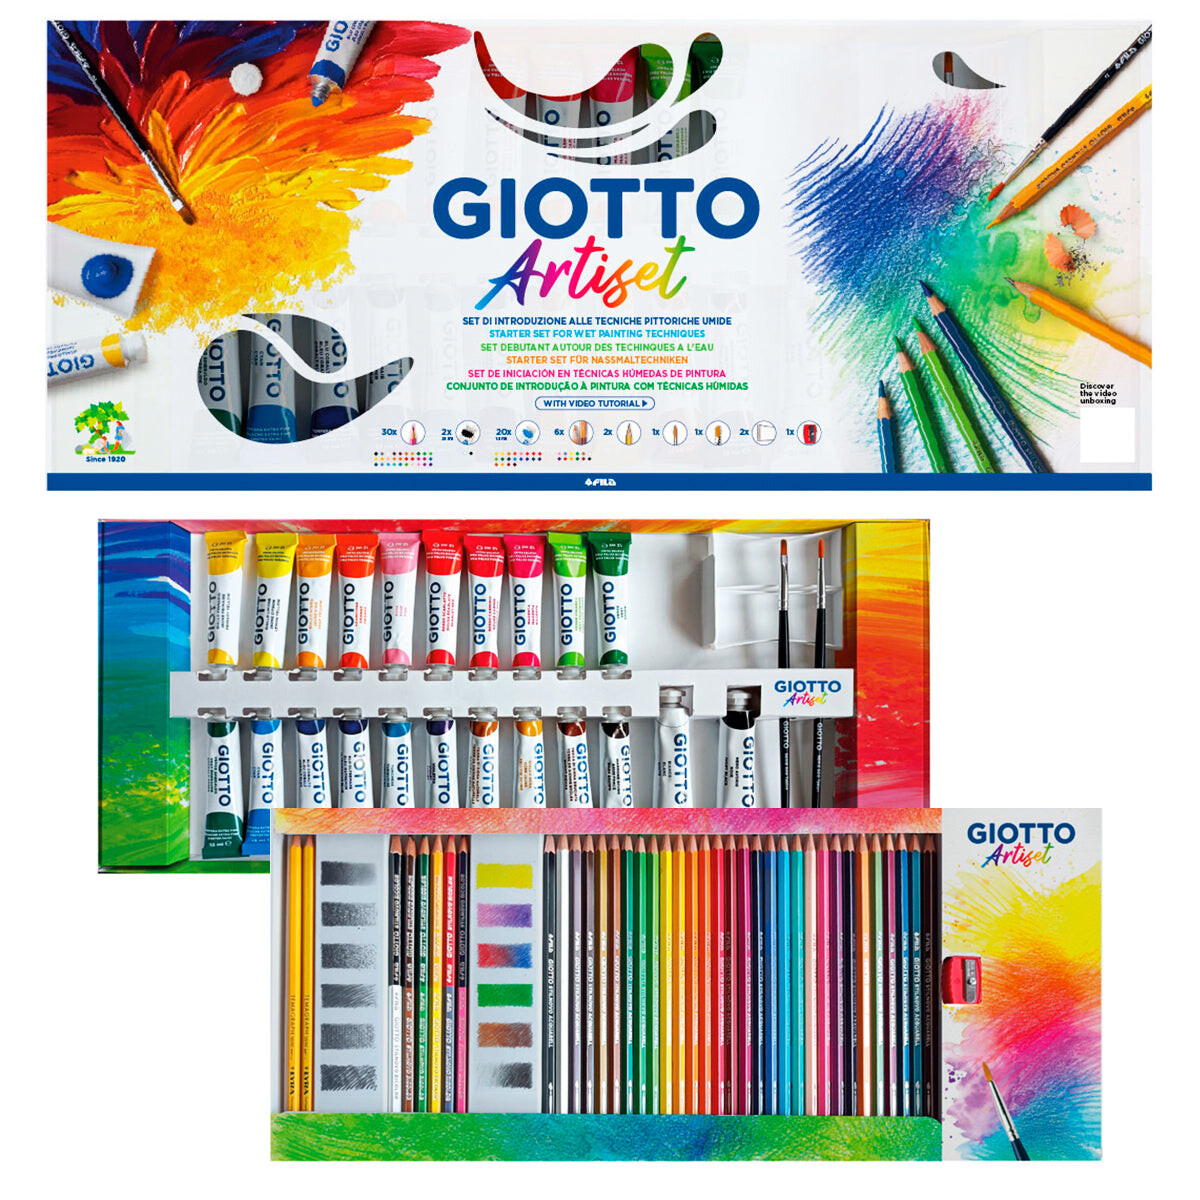 Set Arte Giotto Colores + Témperas + Pinceles 65pcs 